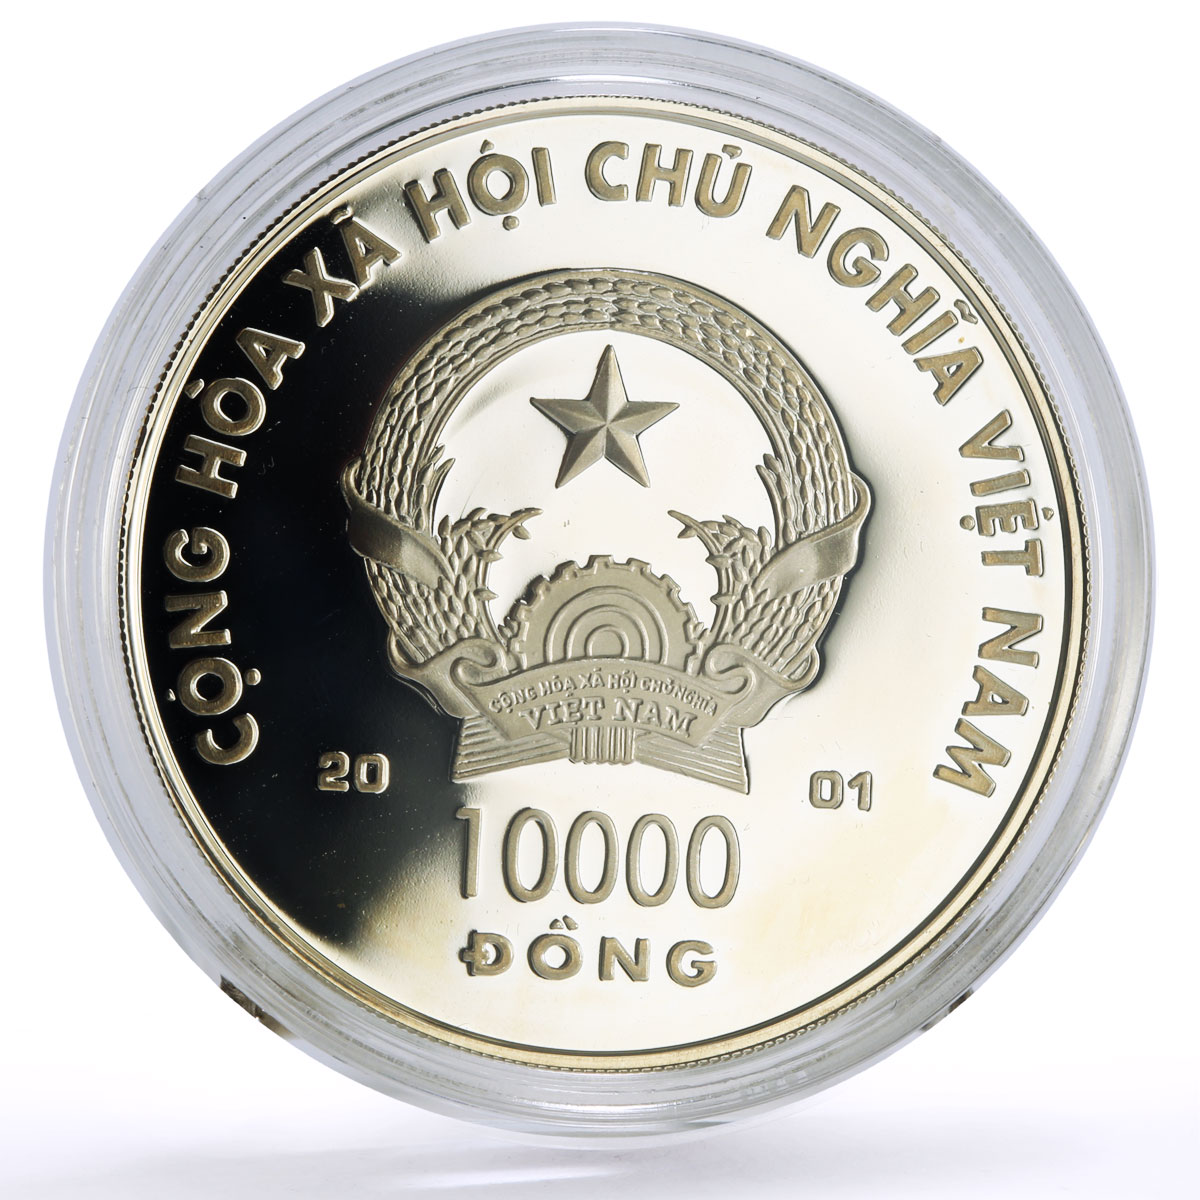 Vietnam set of 3 coins Lunar Calendar Year of the Snake proof silver coins 2001